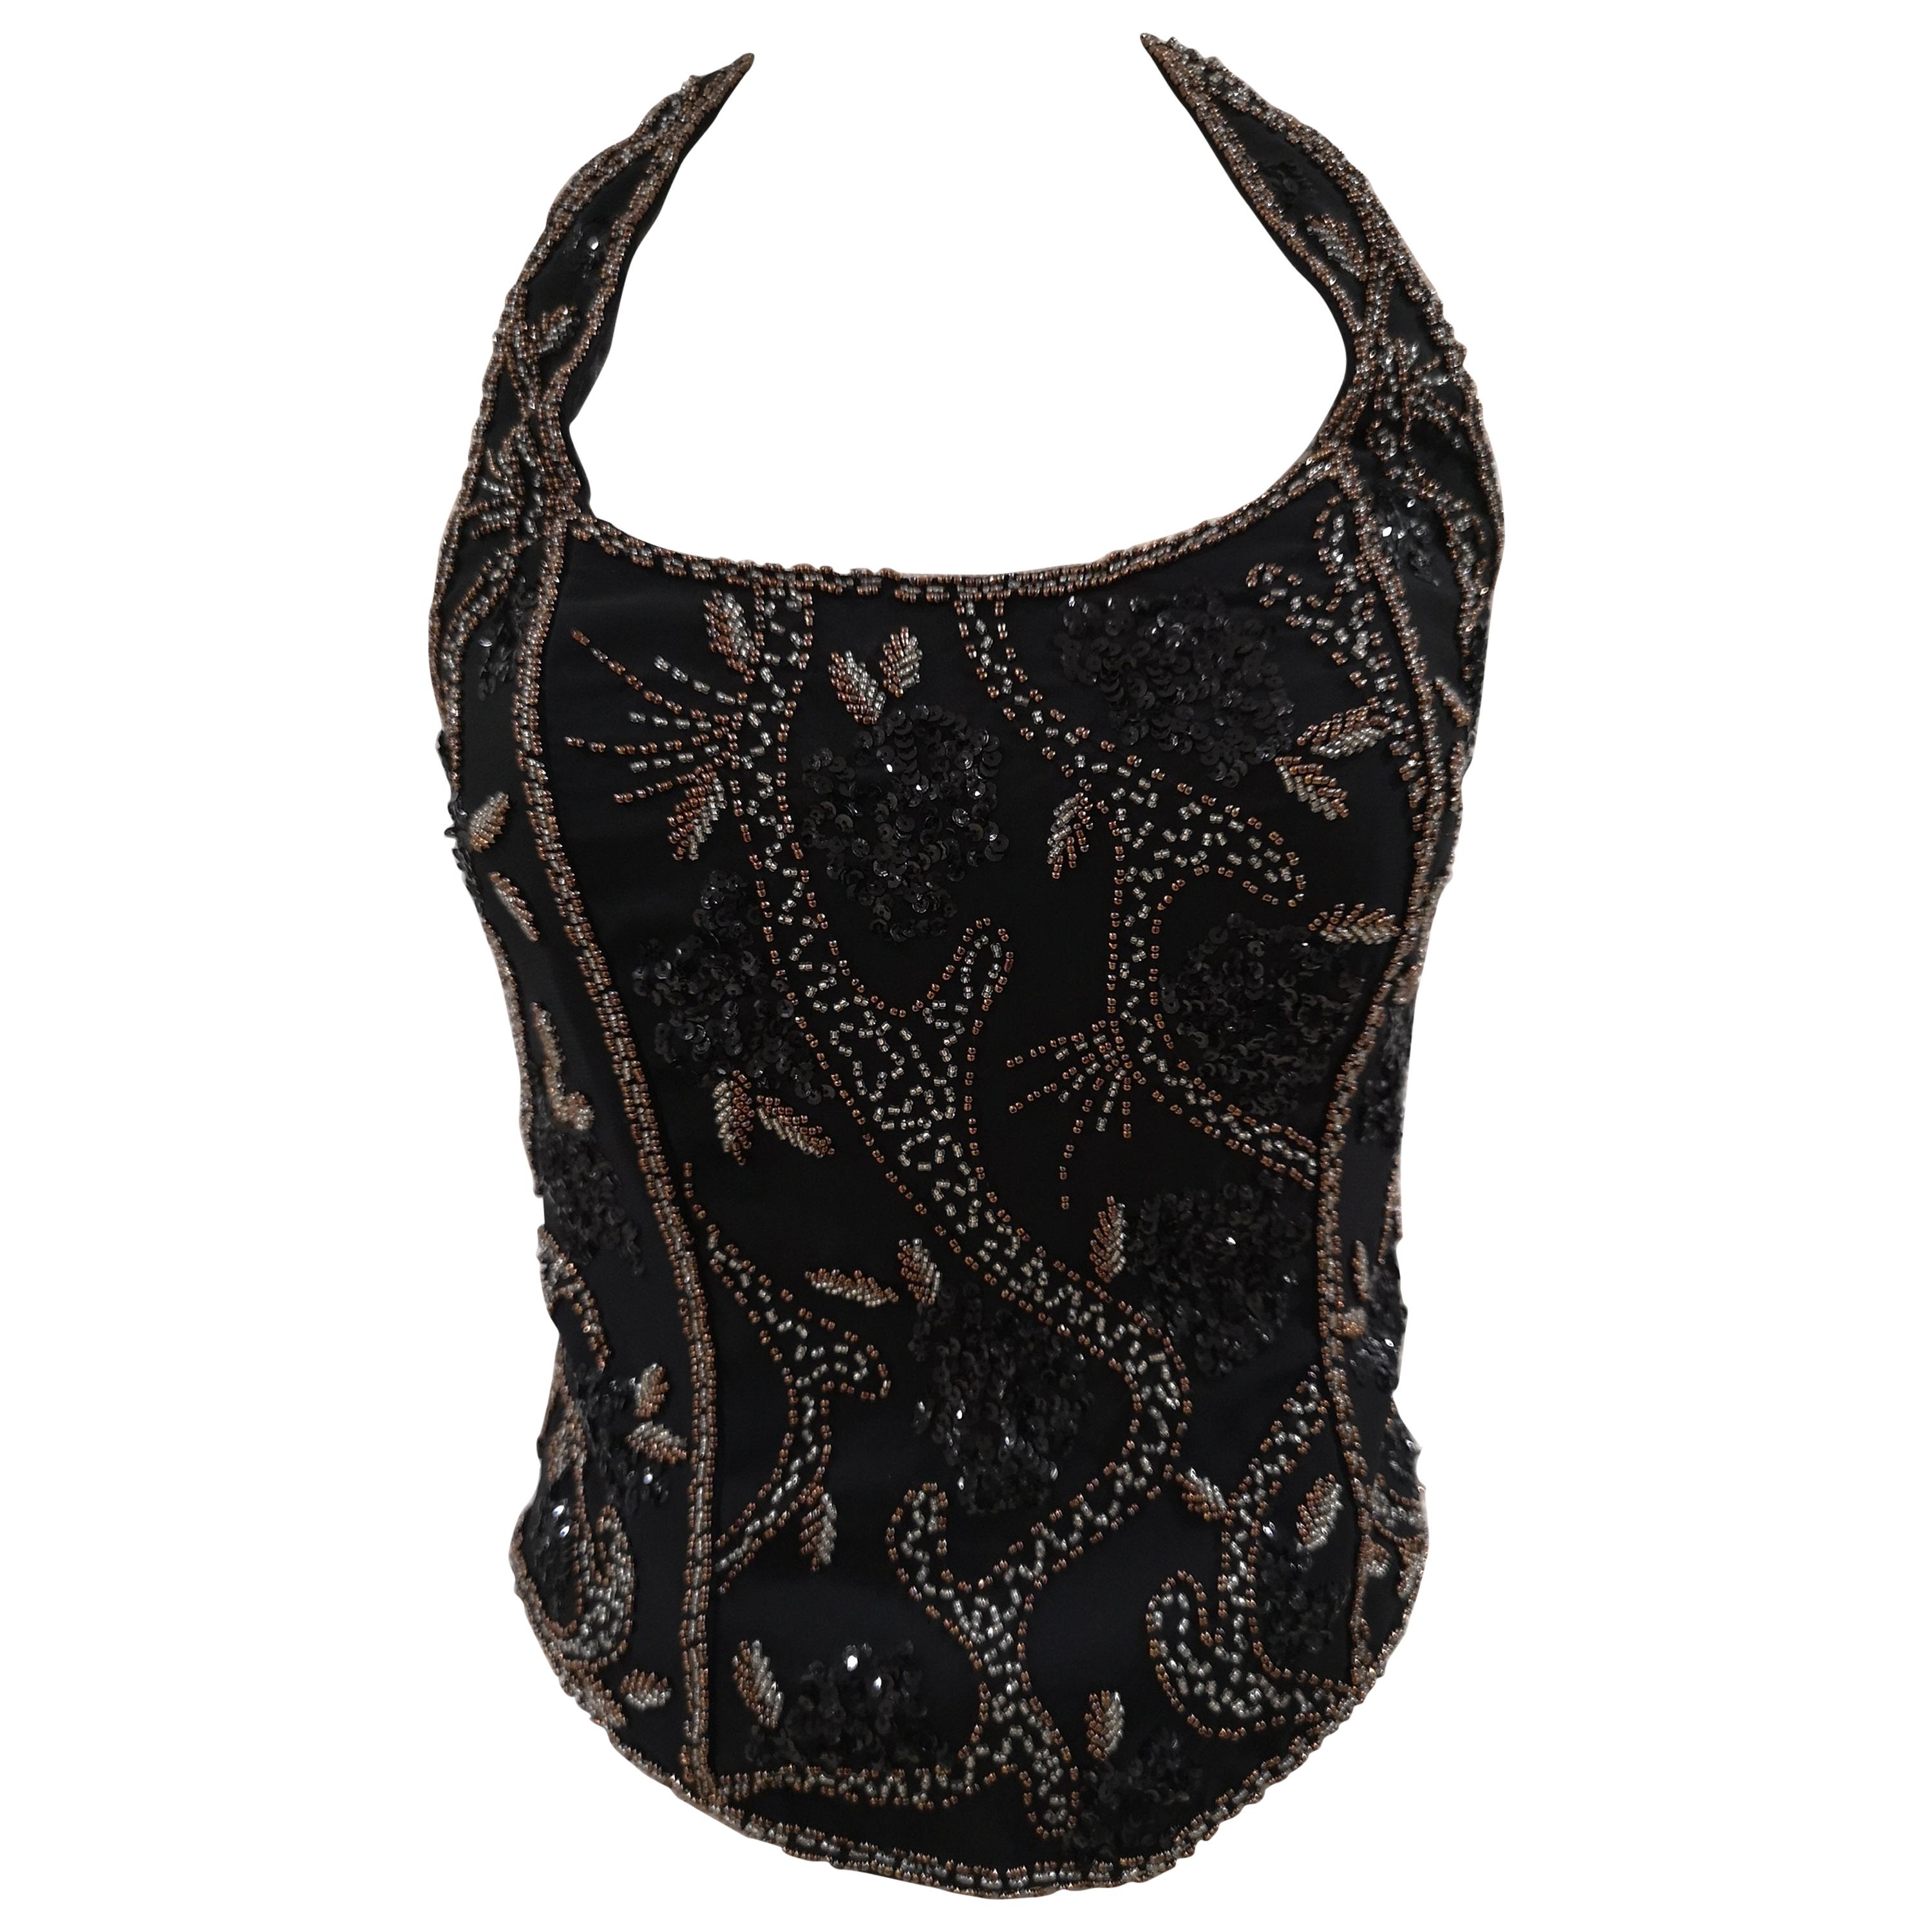 Vintage black beads corset 